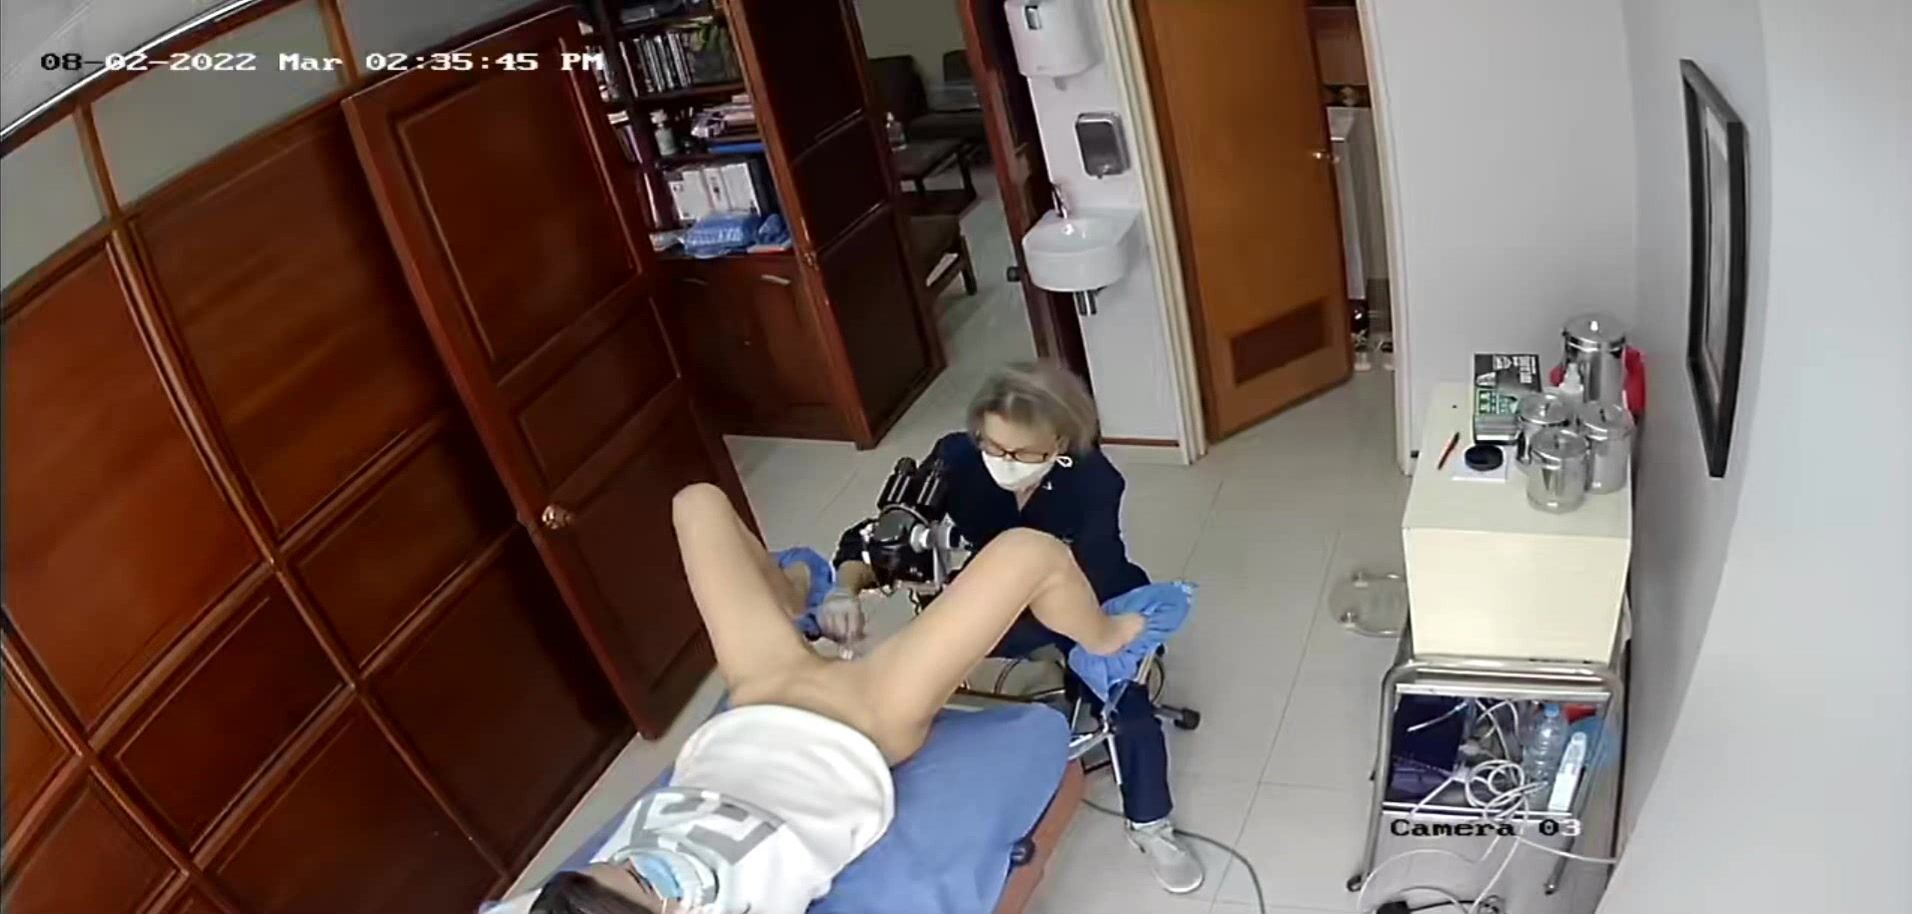 free voyeur videos during gynecological exams Porn Pics Hd